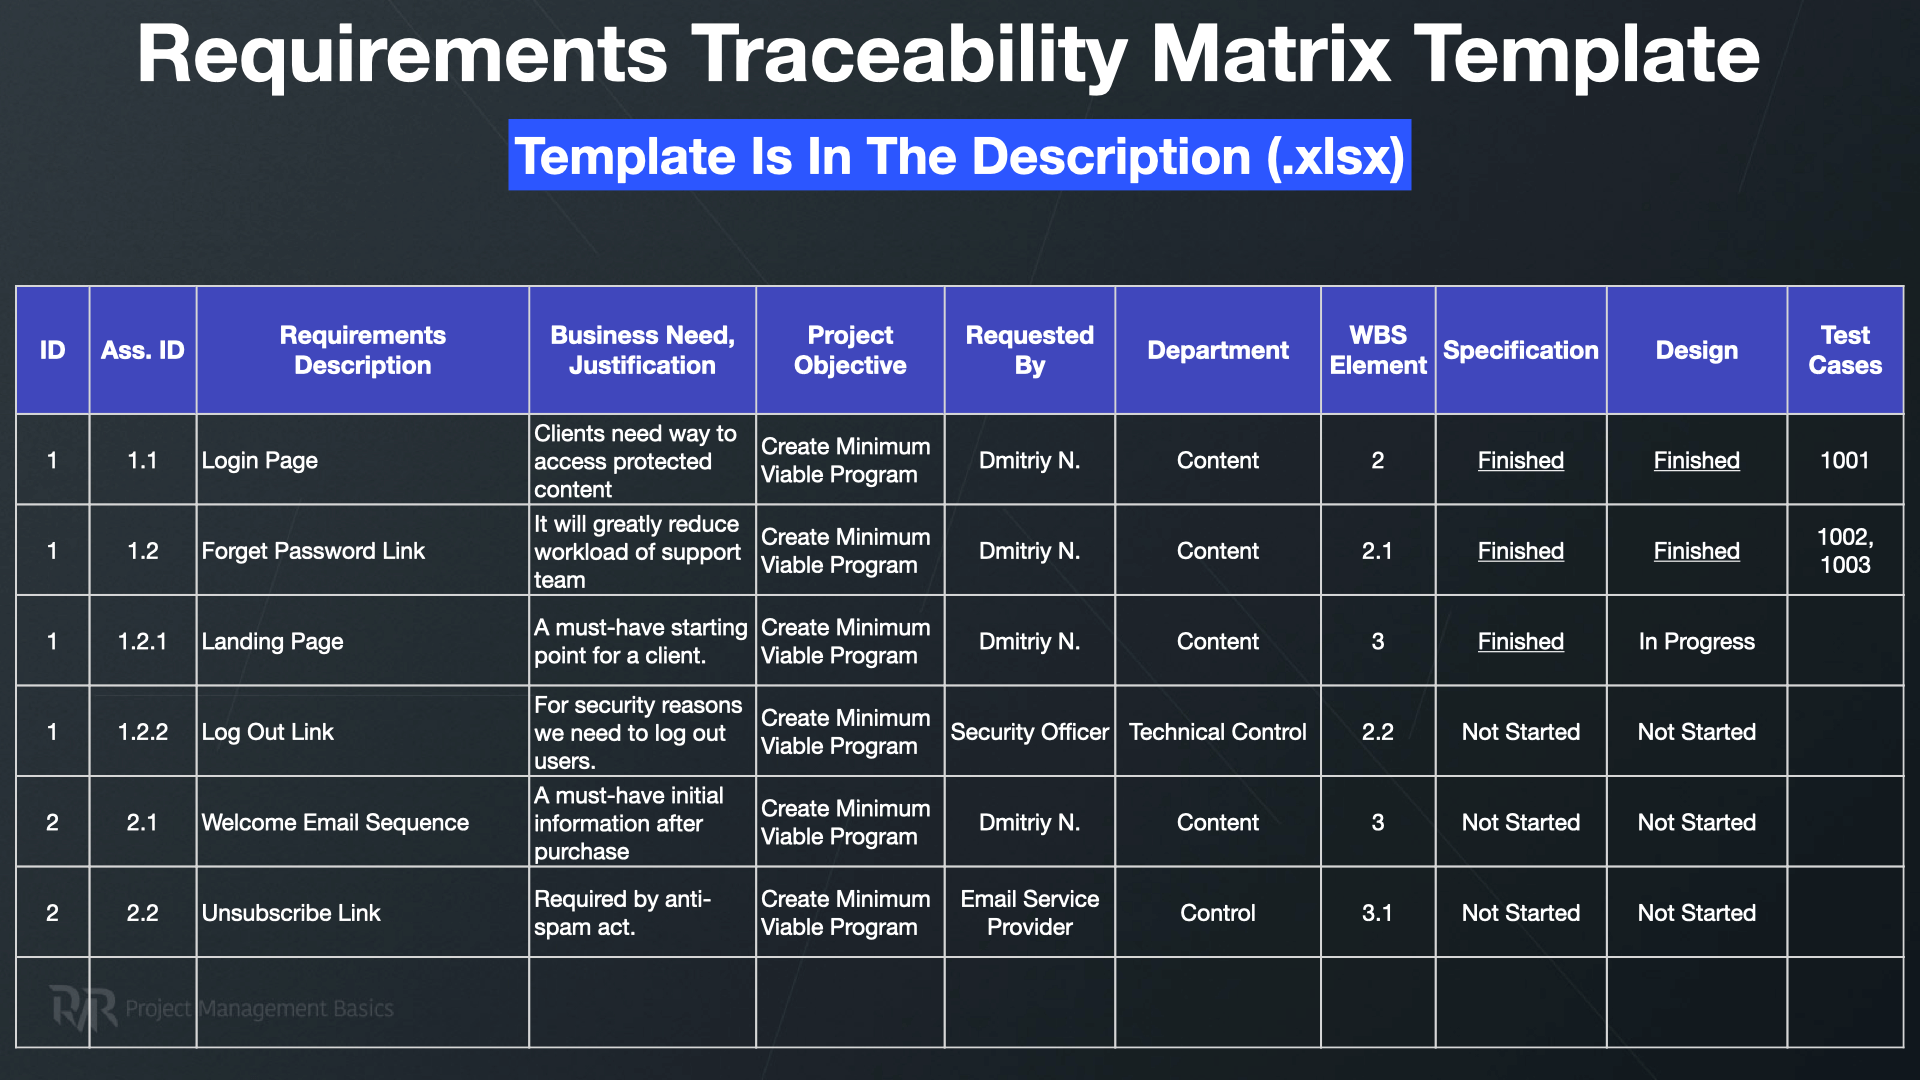 requirements-traceability-matrix-construction-project-example-delmer